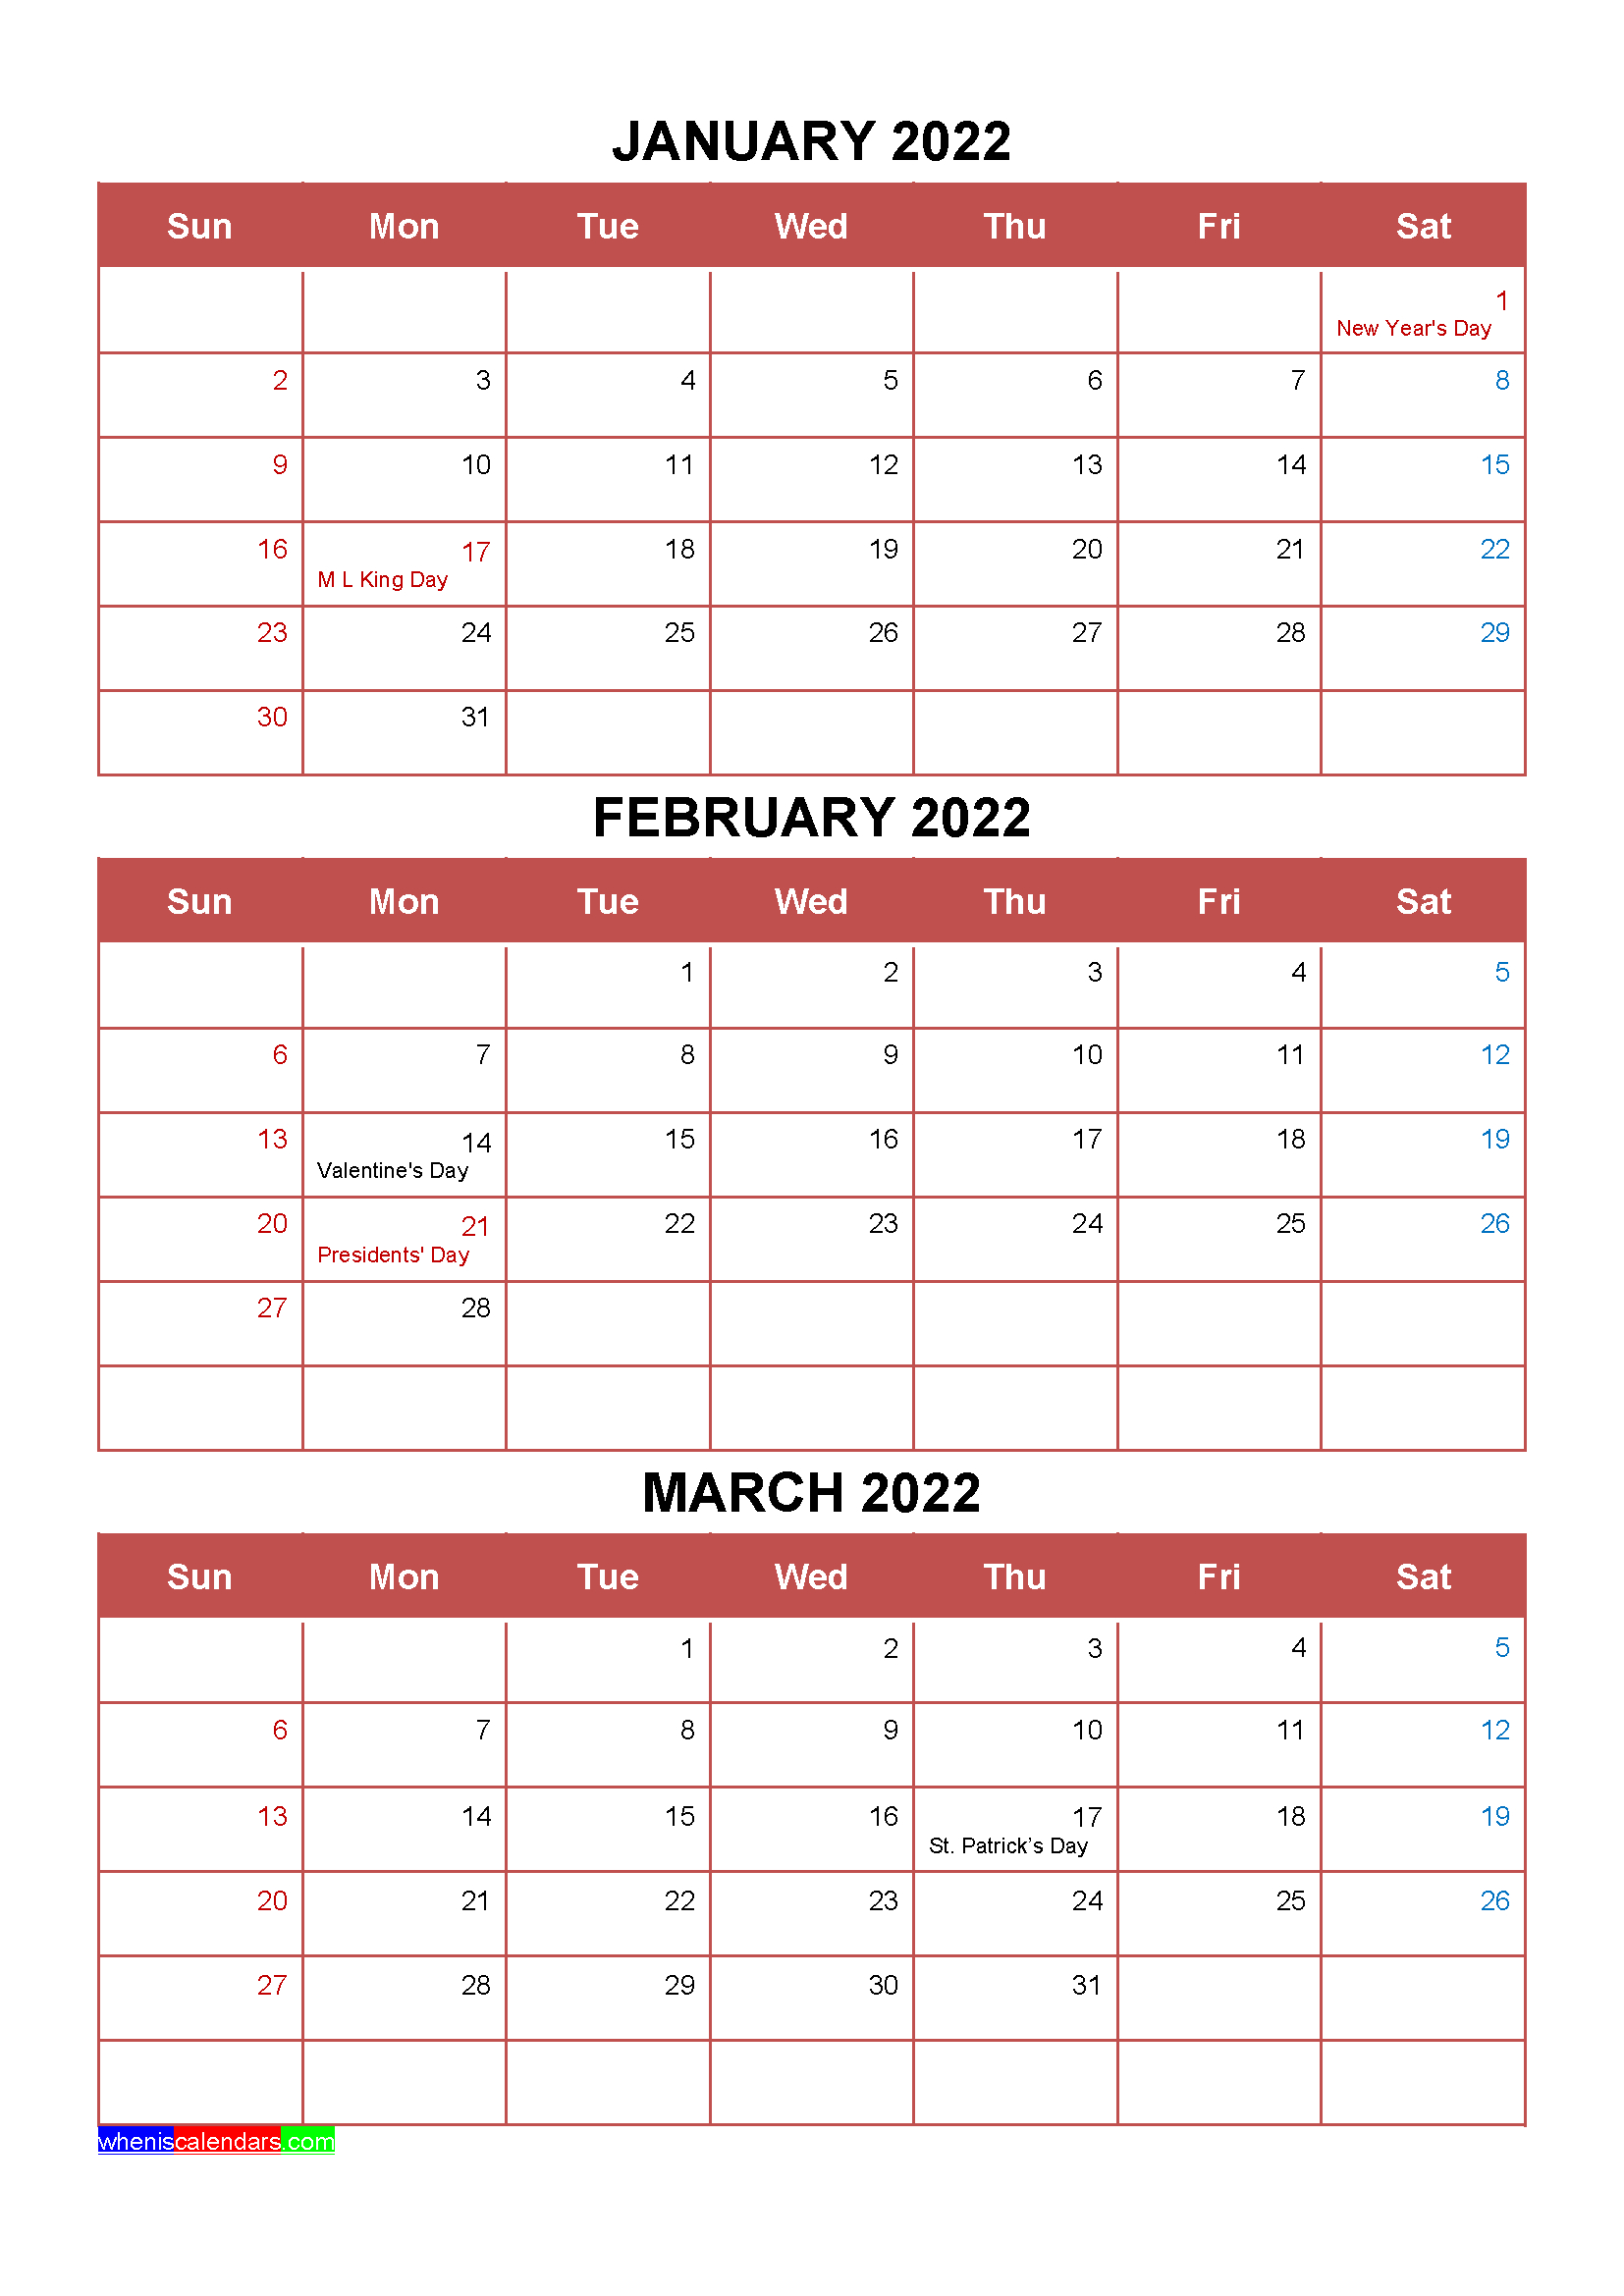 Take March 2022 Crowd Calendar